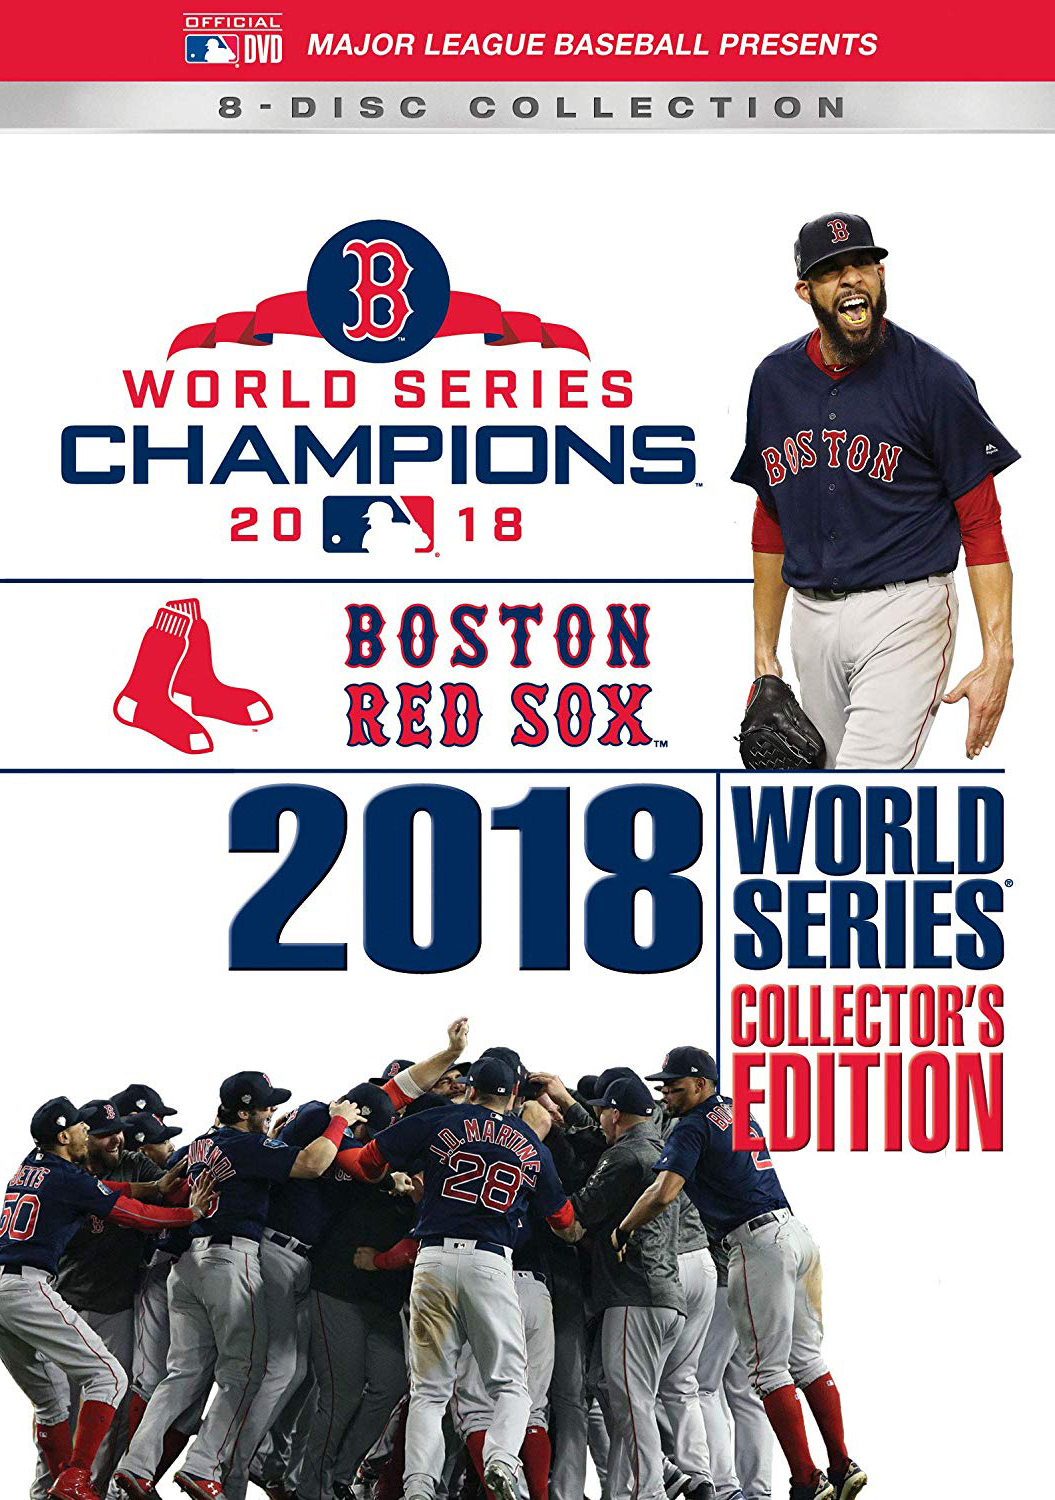 Boston Red Sox Champions